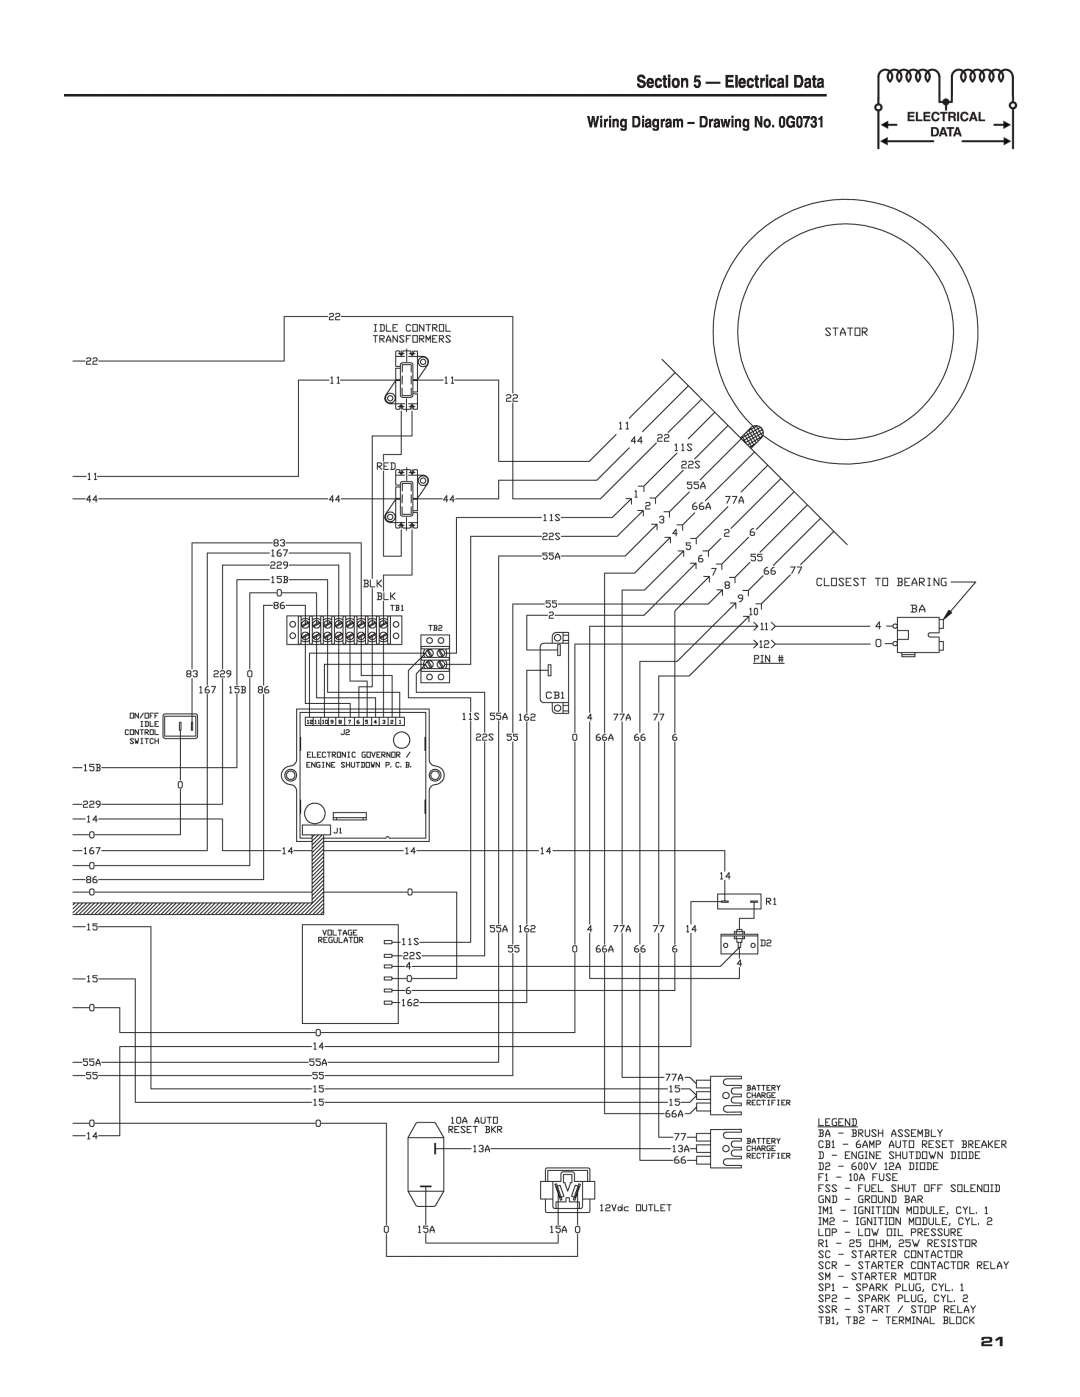 Guardian Technologies 004582-2 owner manual Electrical Data, Wiring Diagram - Drawing No. 0G0731 